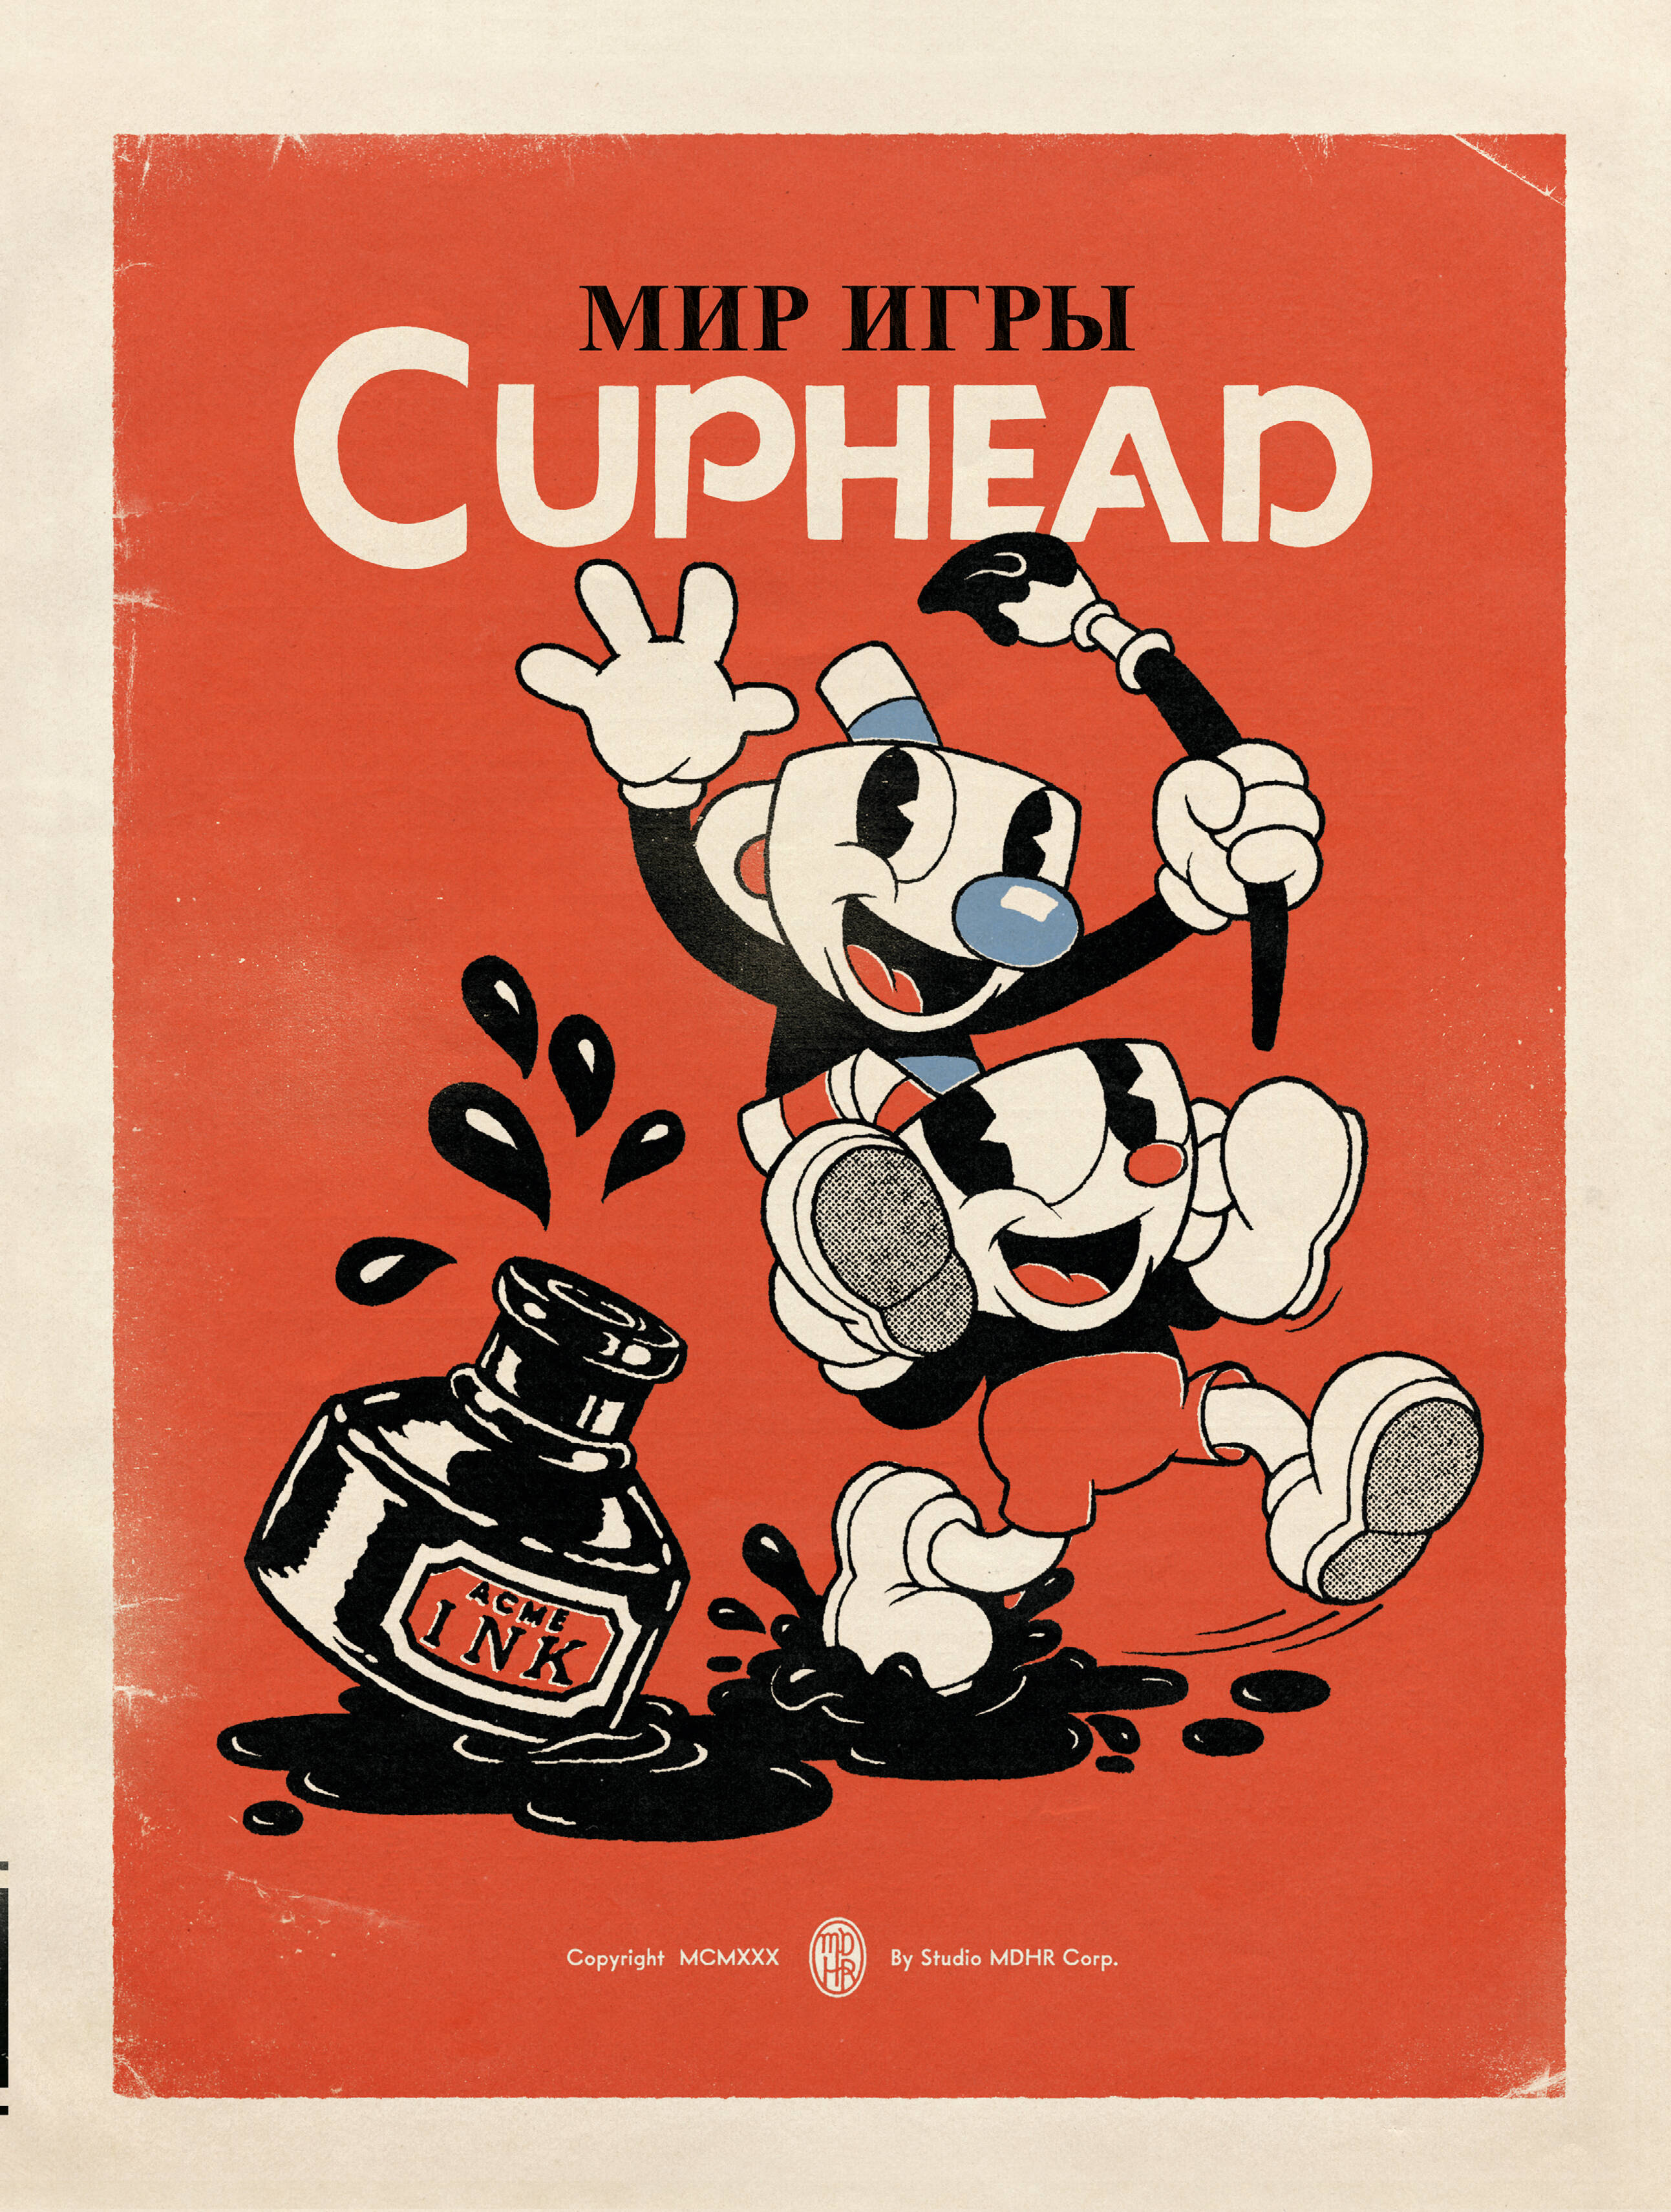 Мольденхауэр Чад Мир игры Cuphead набор артбук мир игры cuphead фигурка уточка тёмный герой